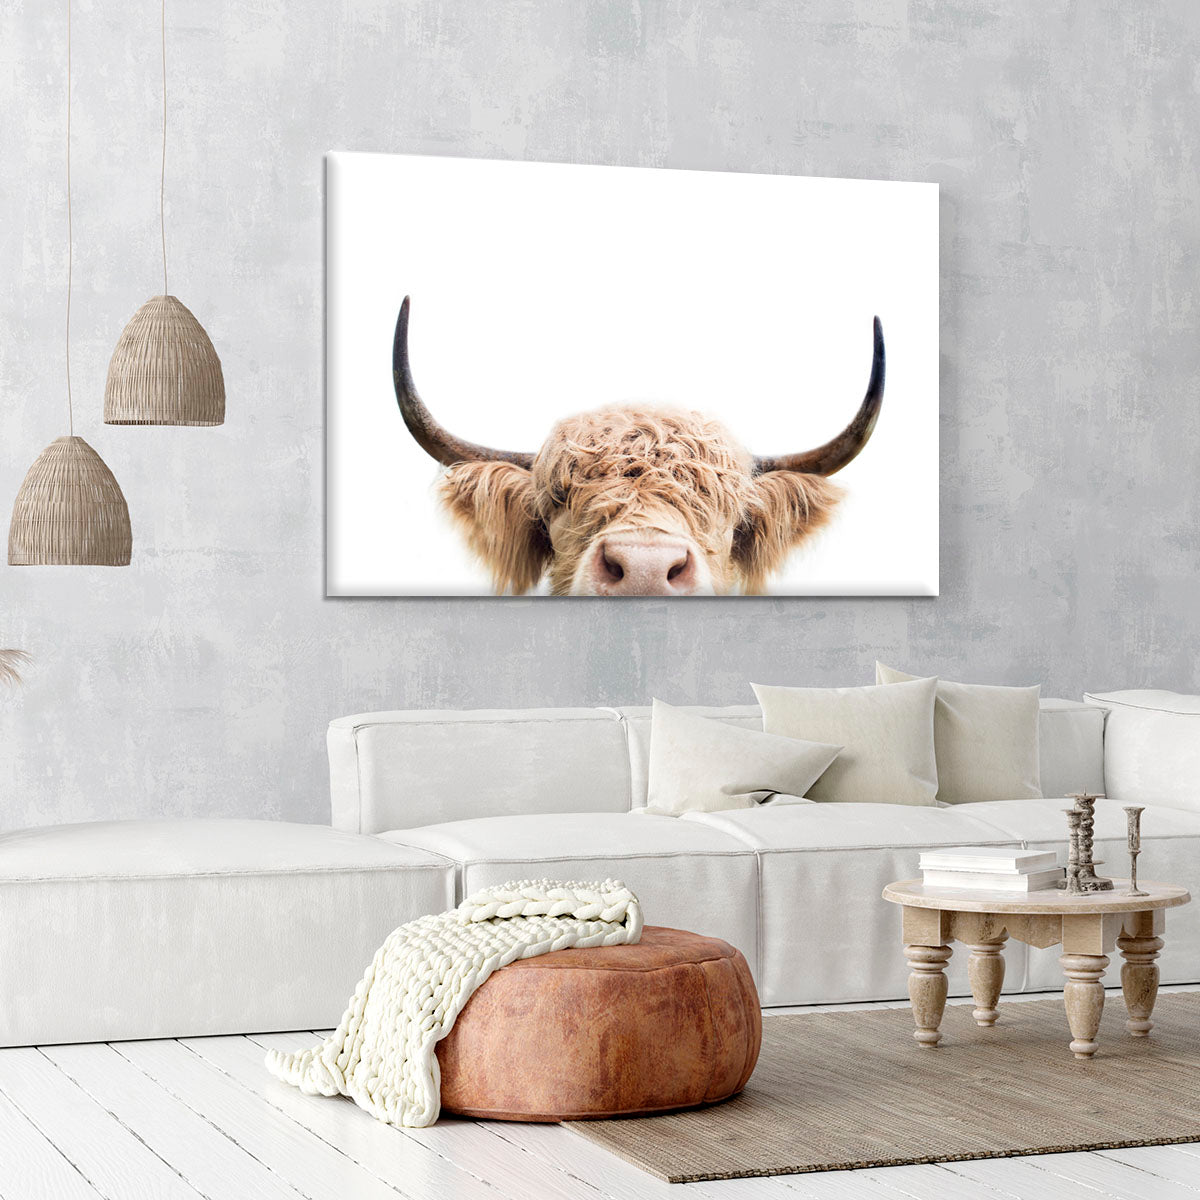 Peeking Cow Canvas Print or Poster - 1x - 6